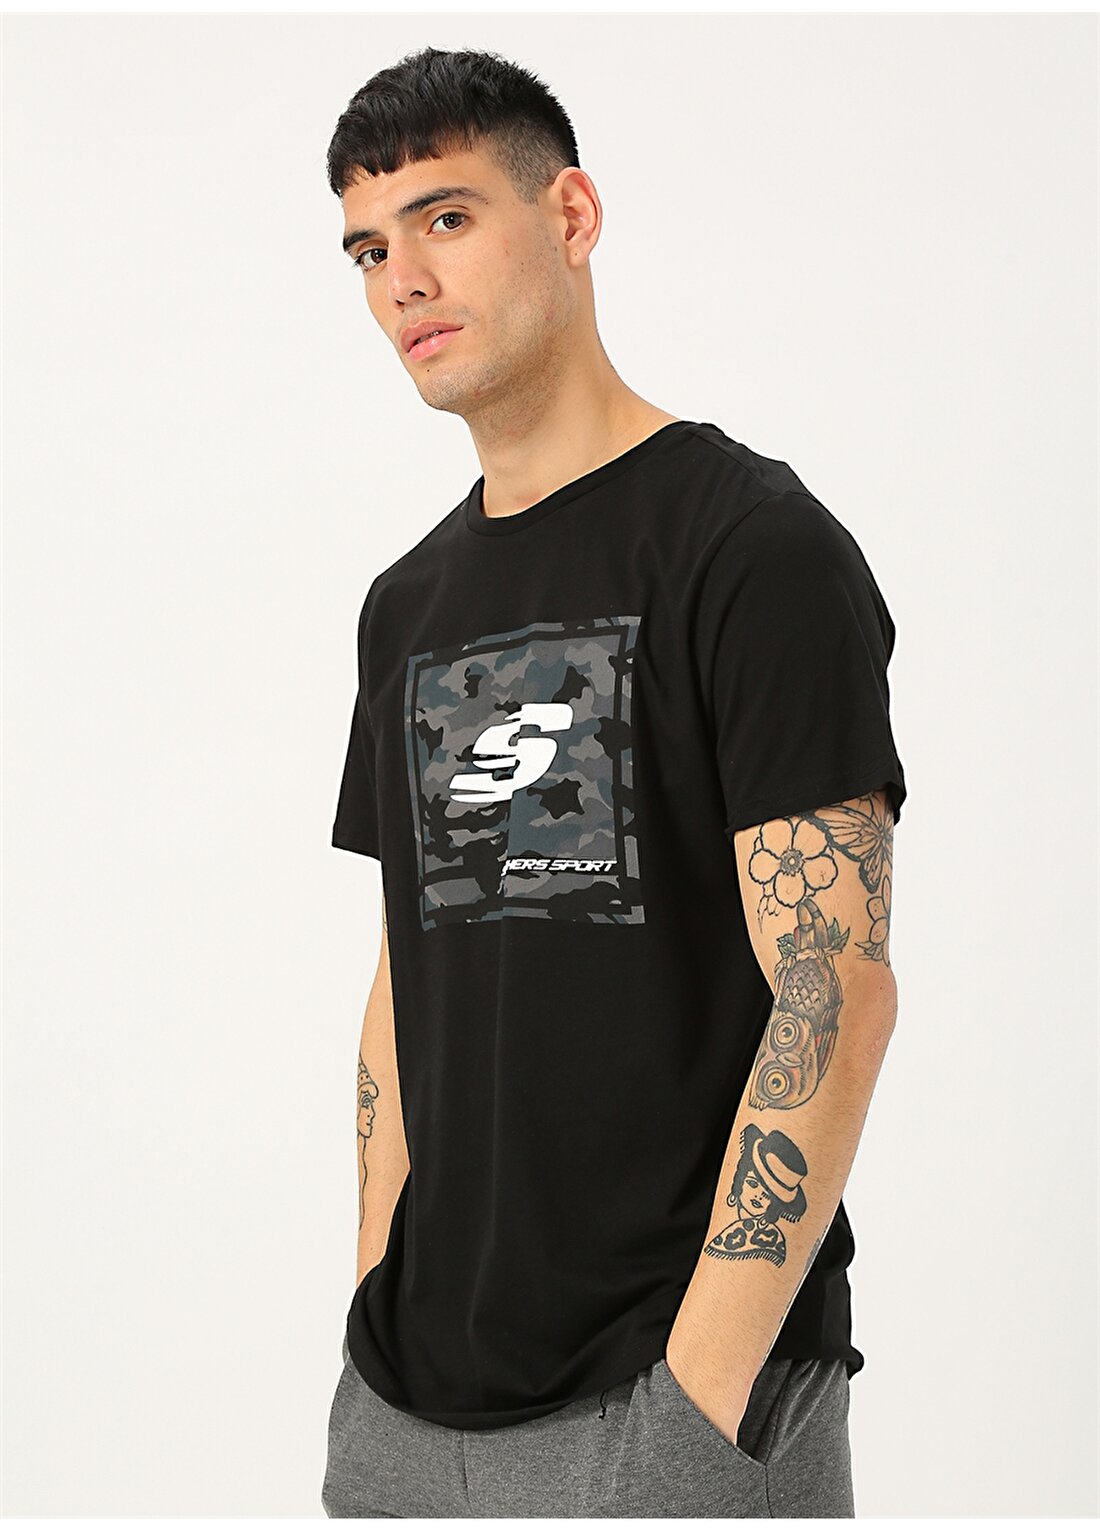 Skechers Siyah Baskılı T-Shirt